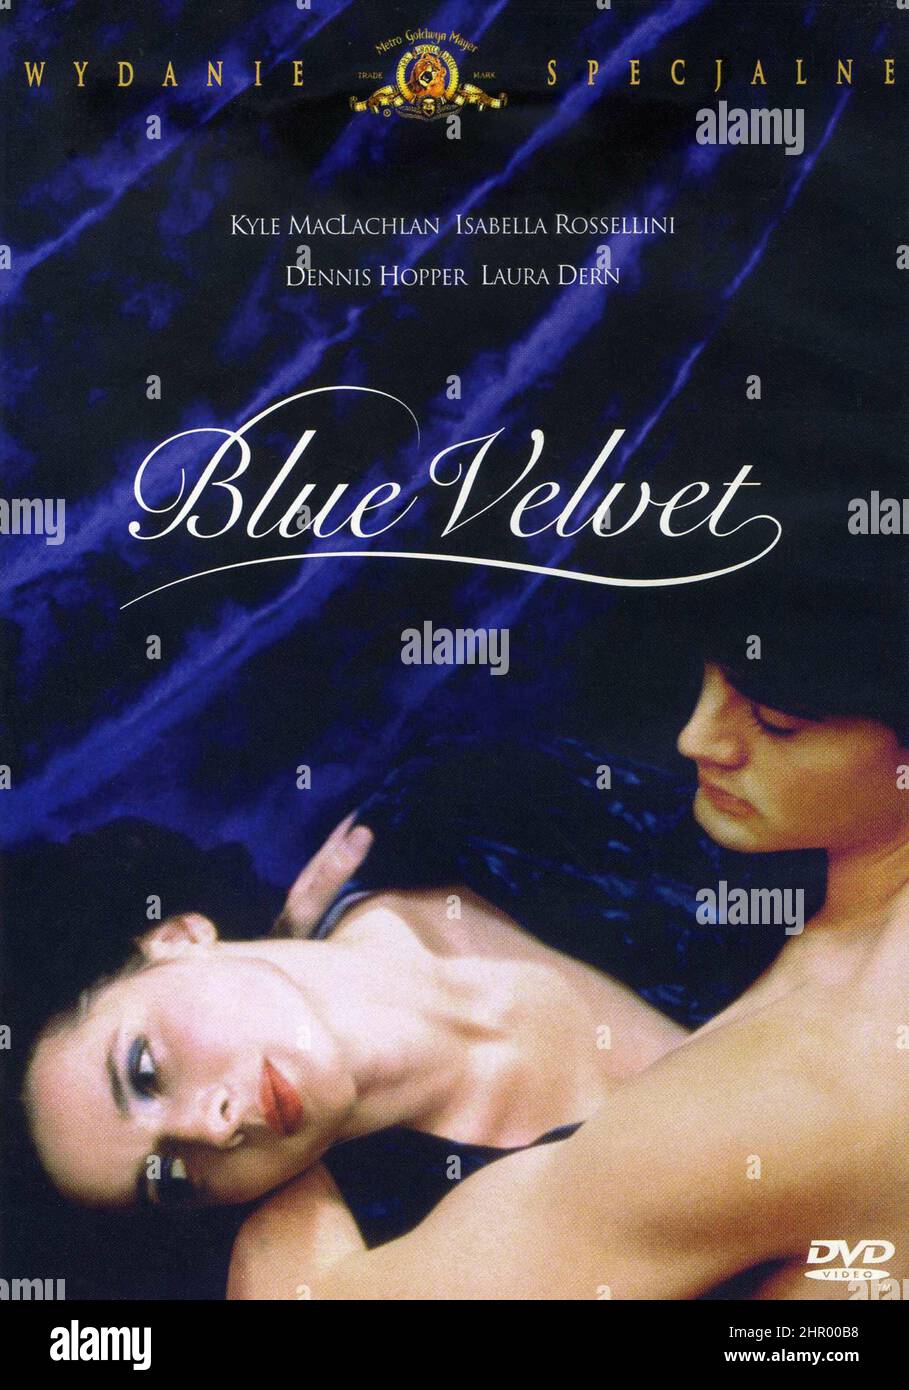 Copertina DVD. "Velluto blu". David Lynch. Foto Stock